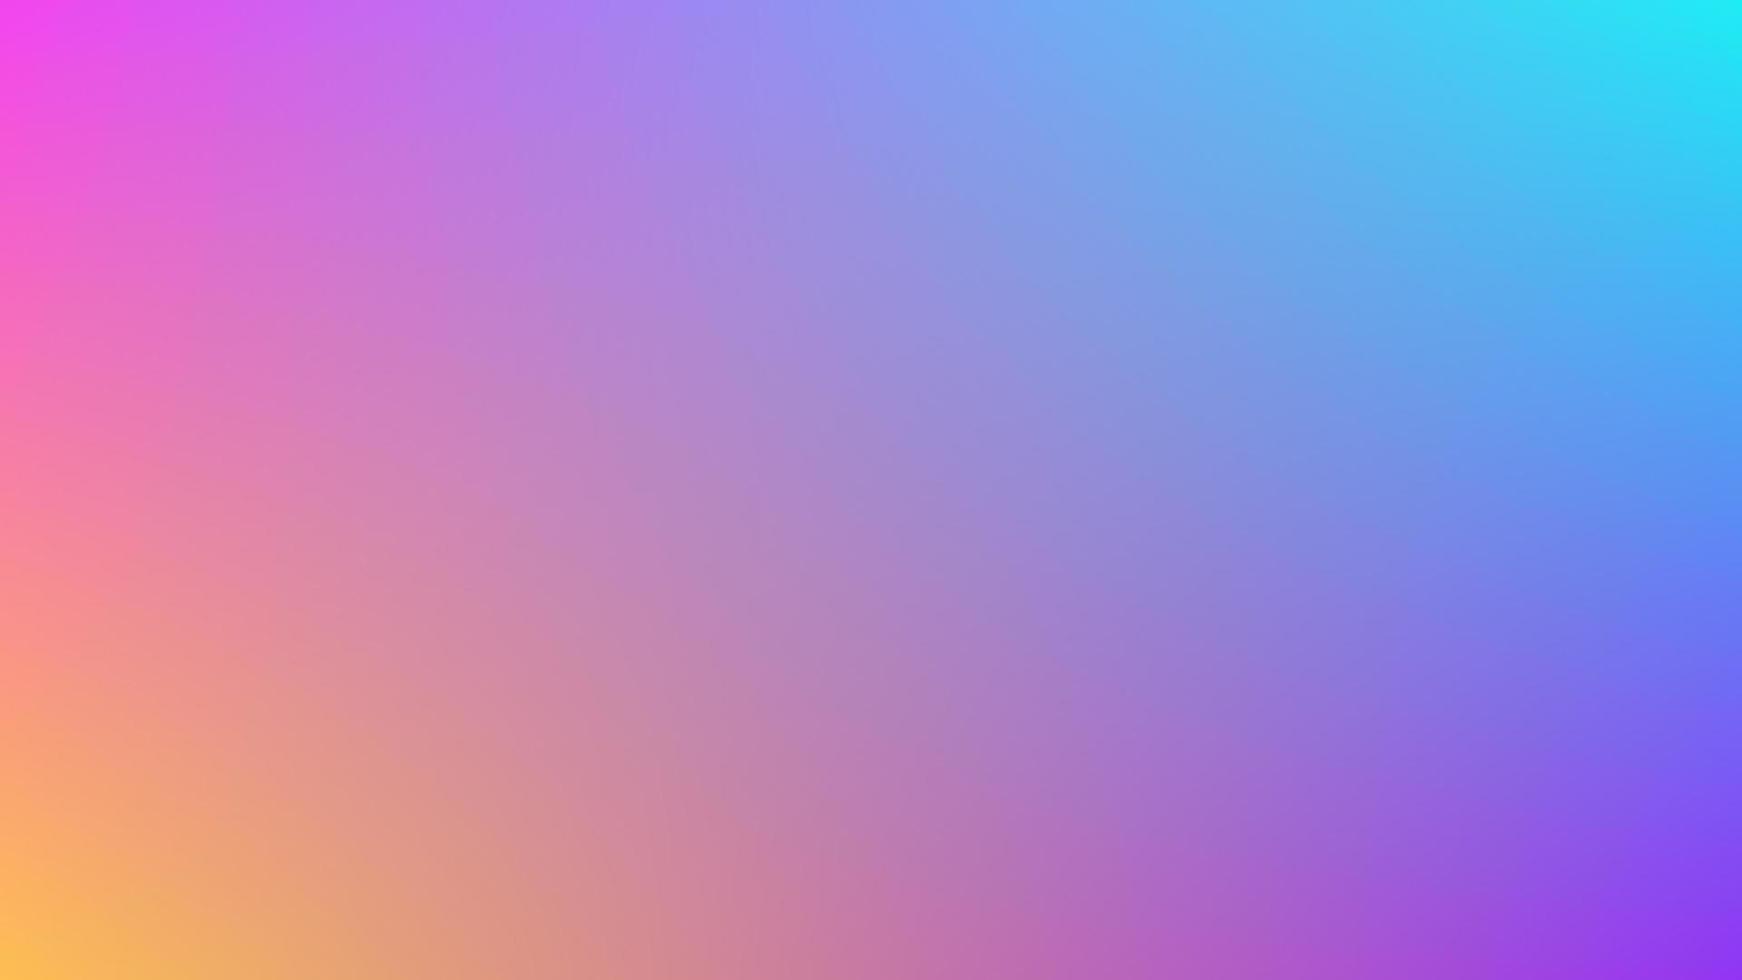 light blue, pink, orange and purple gradient background vector